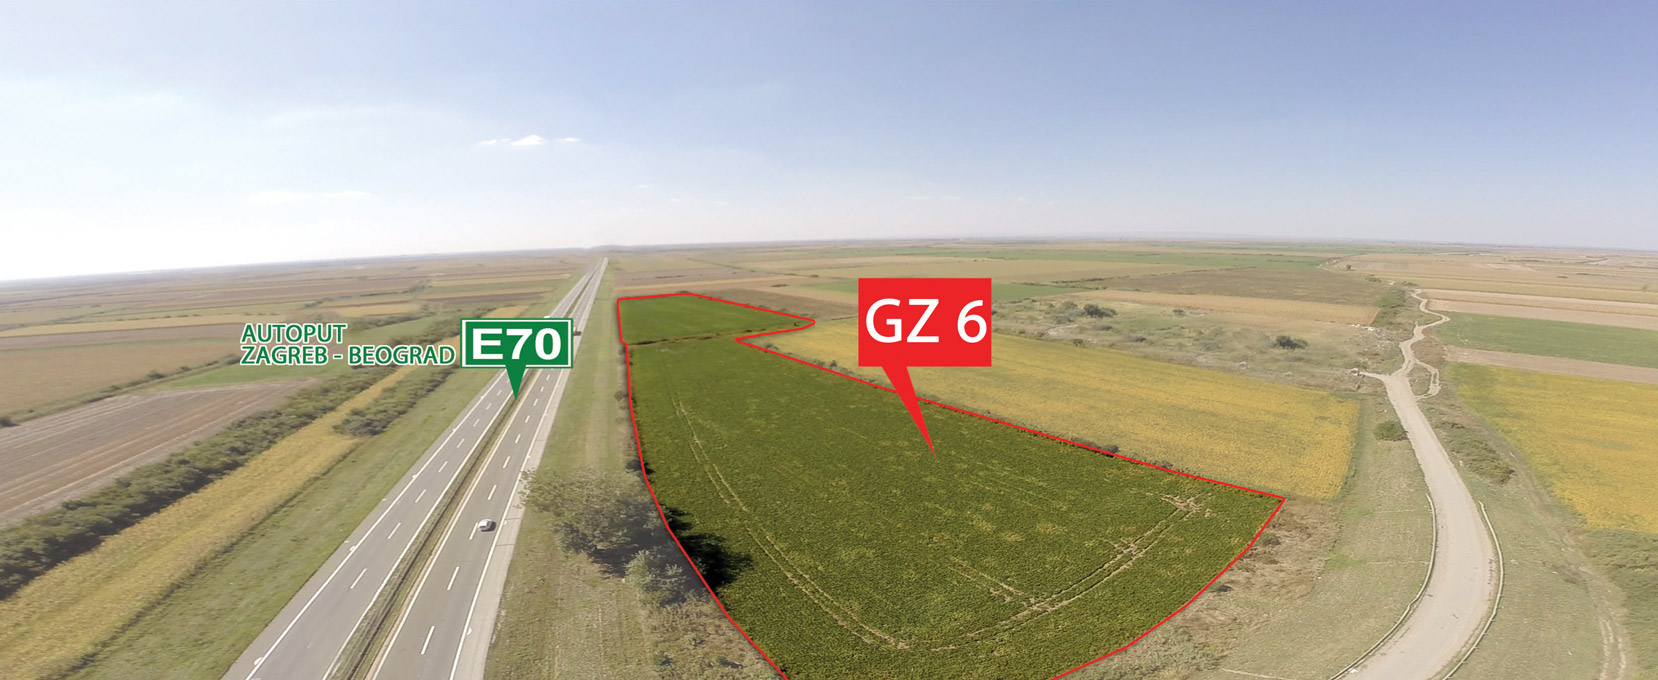 Građevinsko zemljište GZ6, prodaja zemljišta